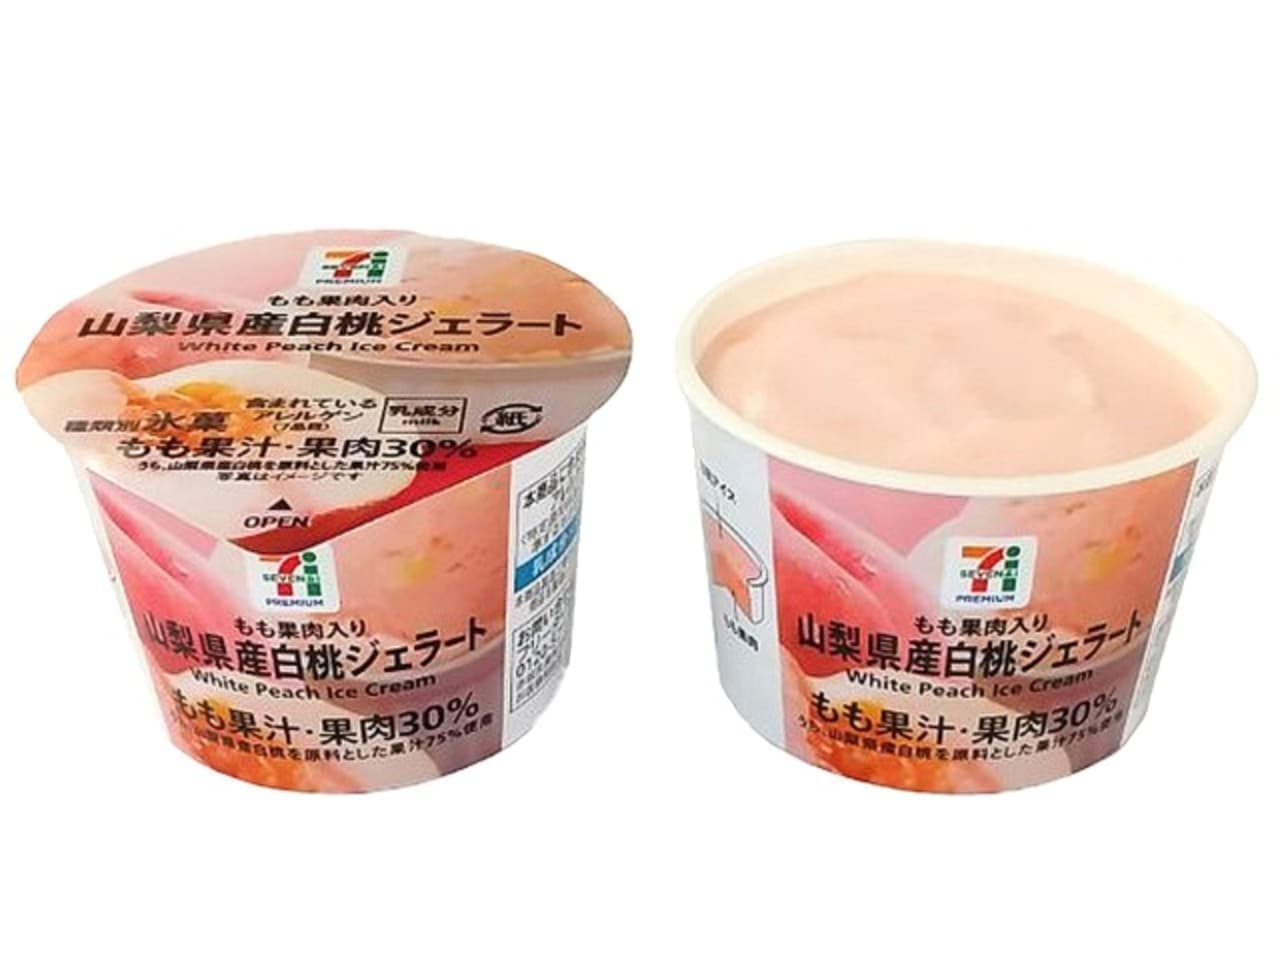 7-ELEVEN "7 Premium Yamanashi White Peach Gelato